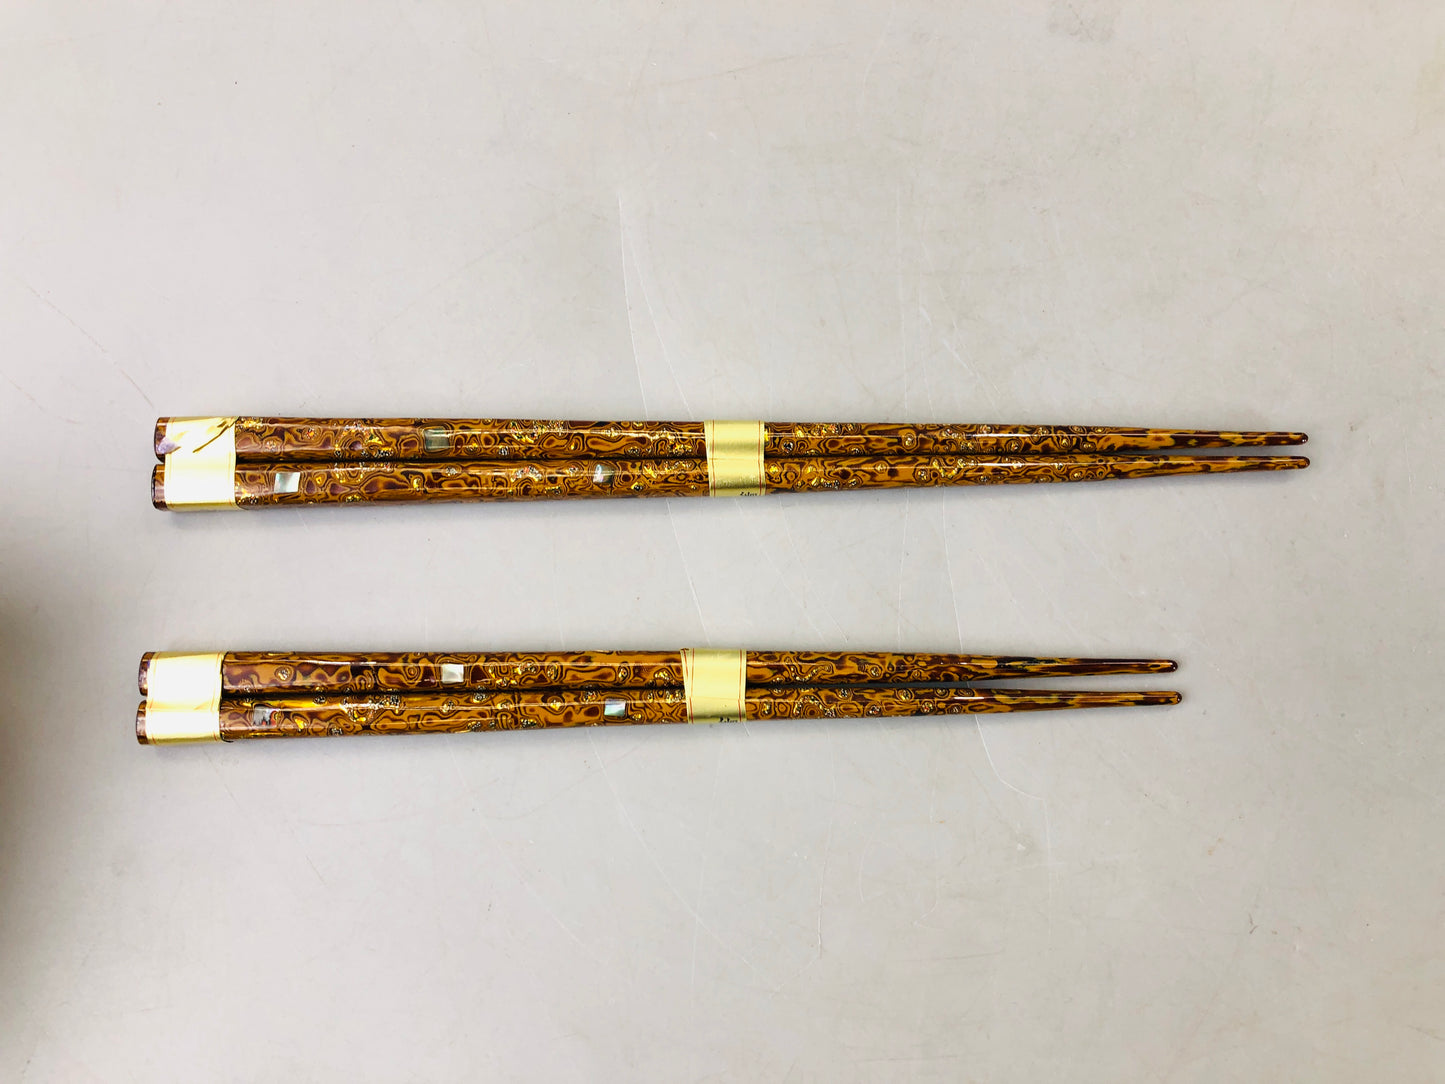 Y6131 [VIDEO] HASHI Wakasa lacquer chopsticks pair signed box Makie Japan antique